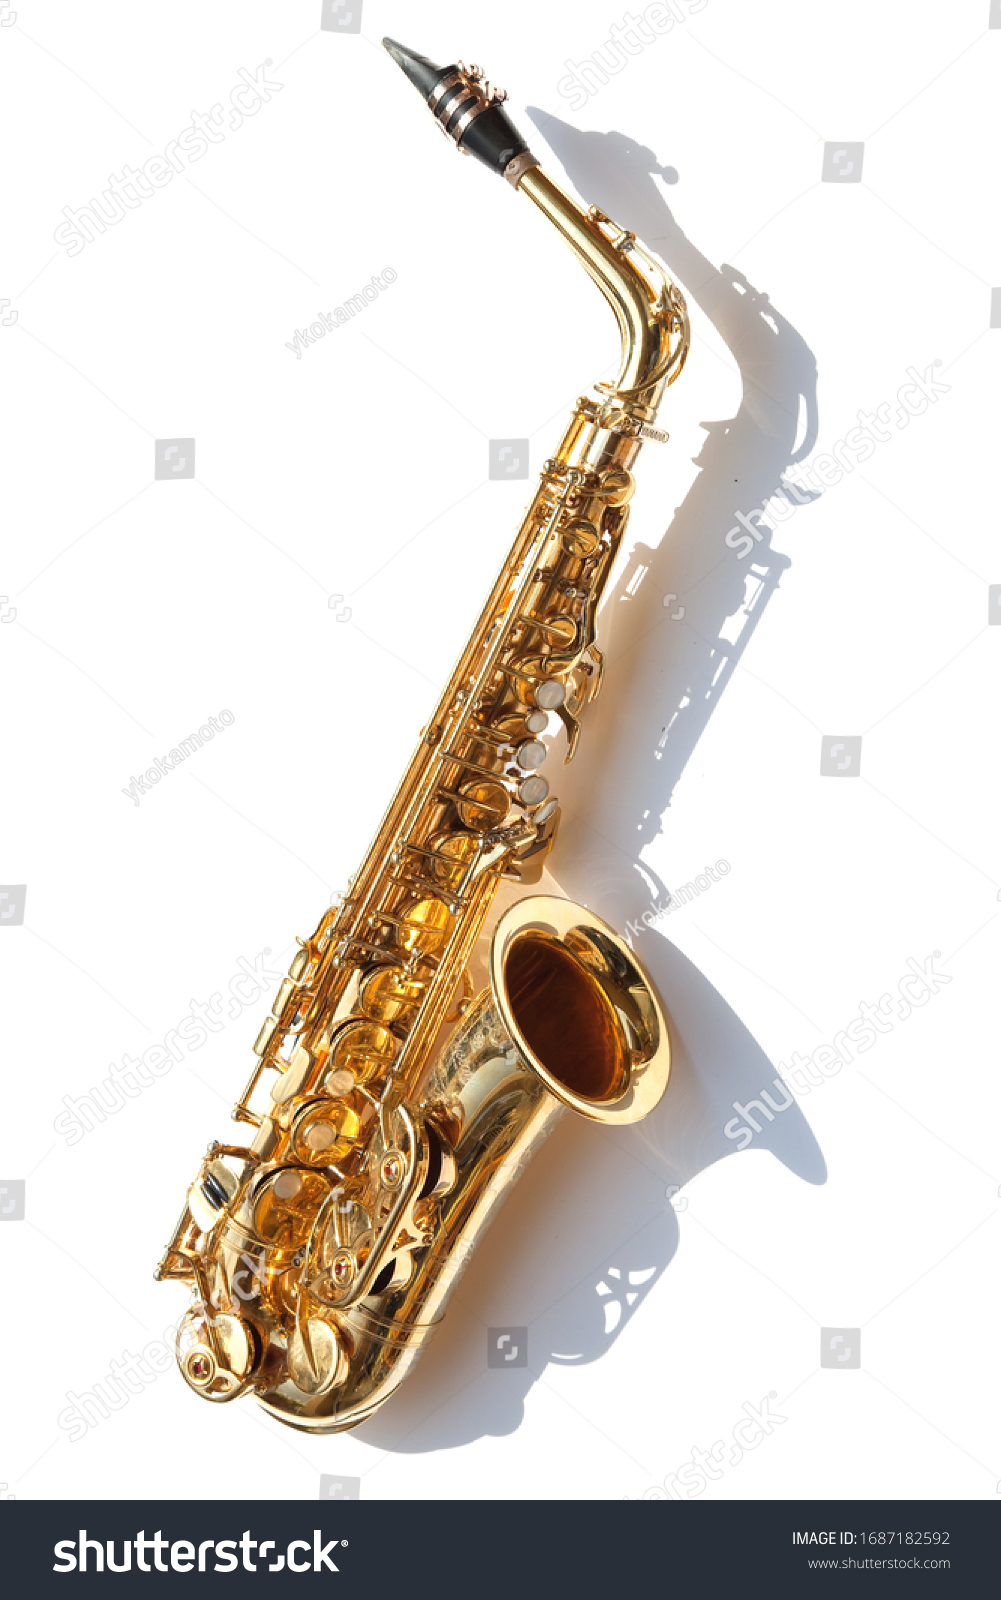 Saxophone, brass saxophone, su, gold sack
Music background, #1687182592